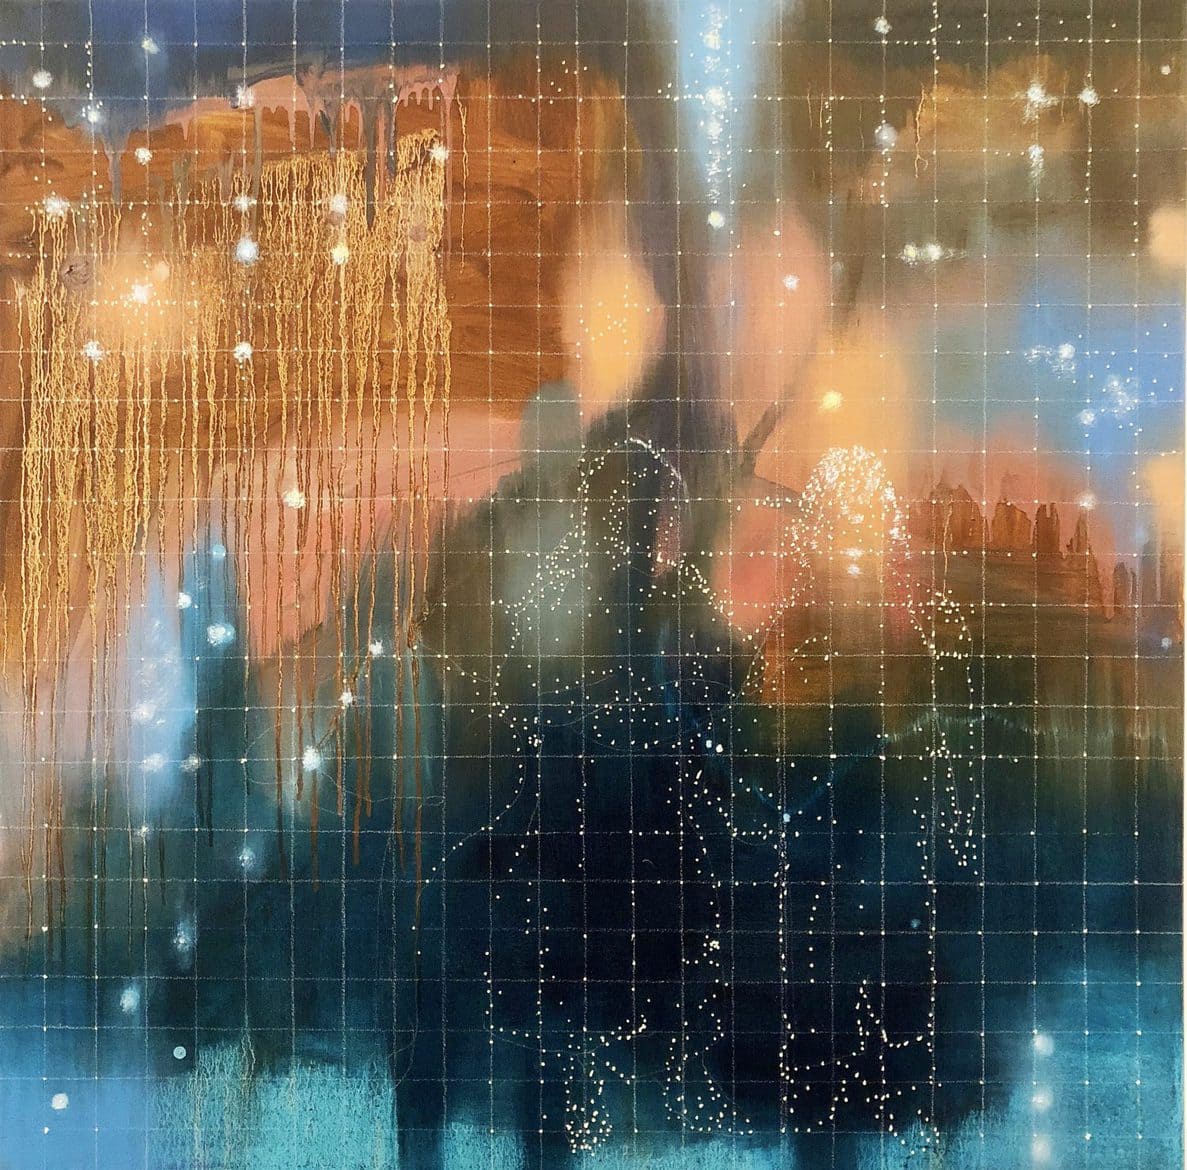 ‘Constellation Study’, 2018, oil on linen, 100 x 100 cm